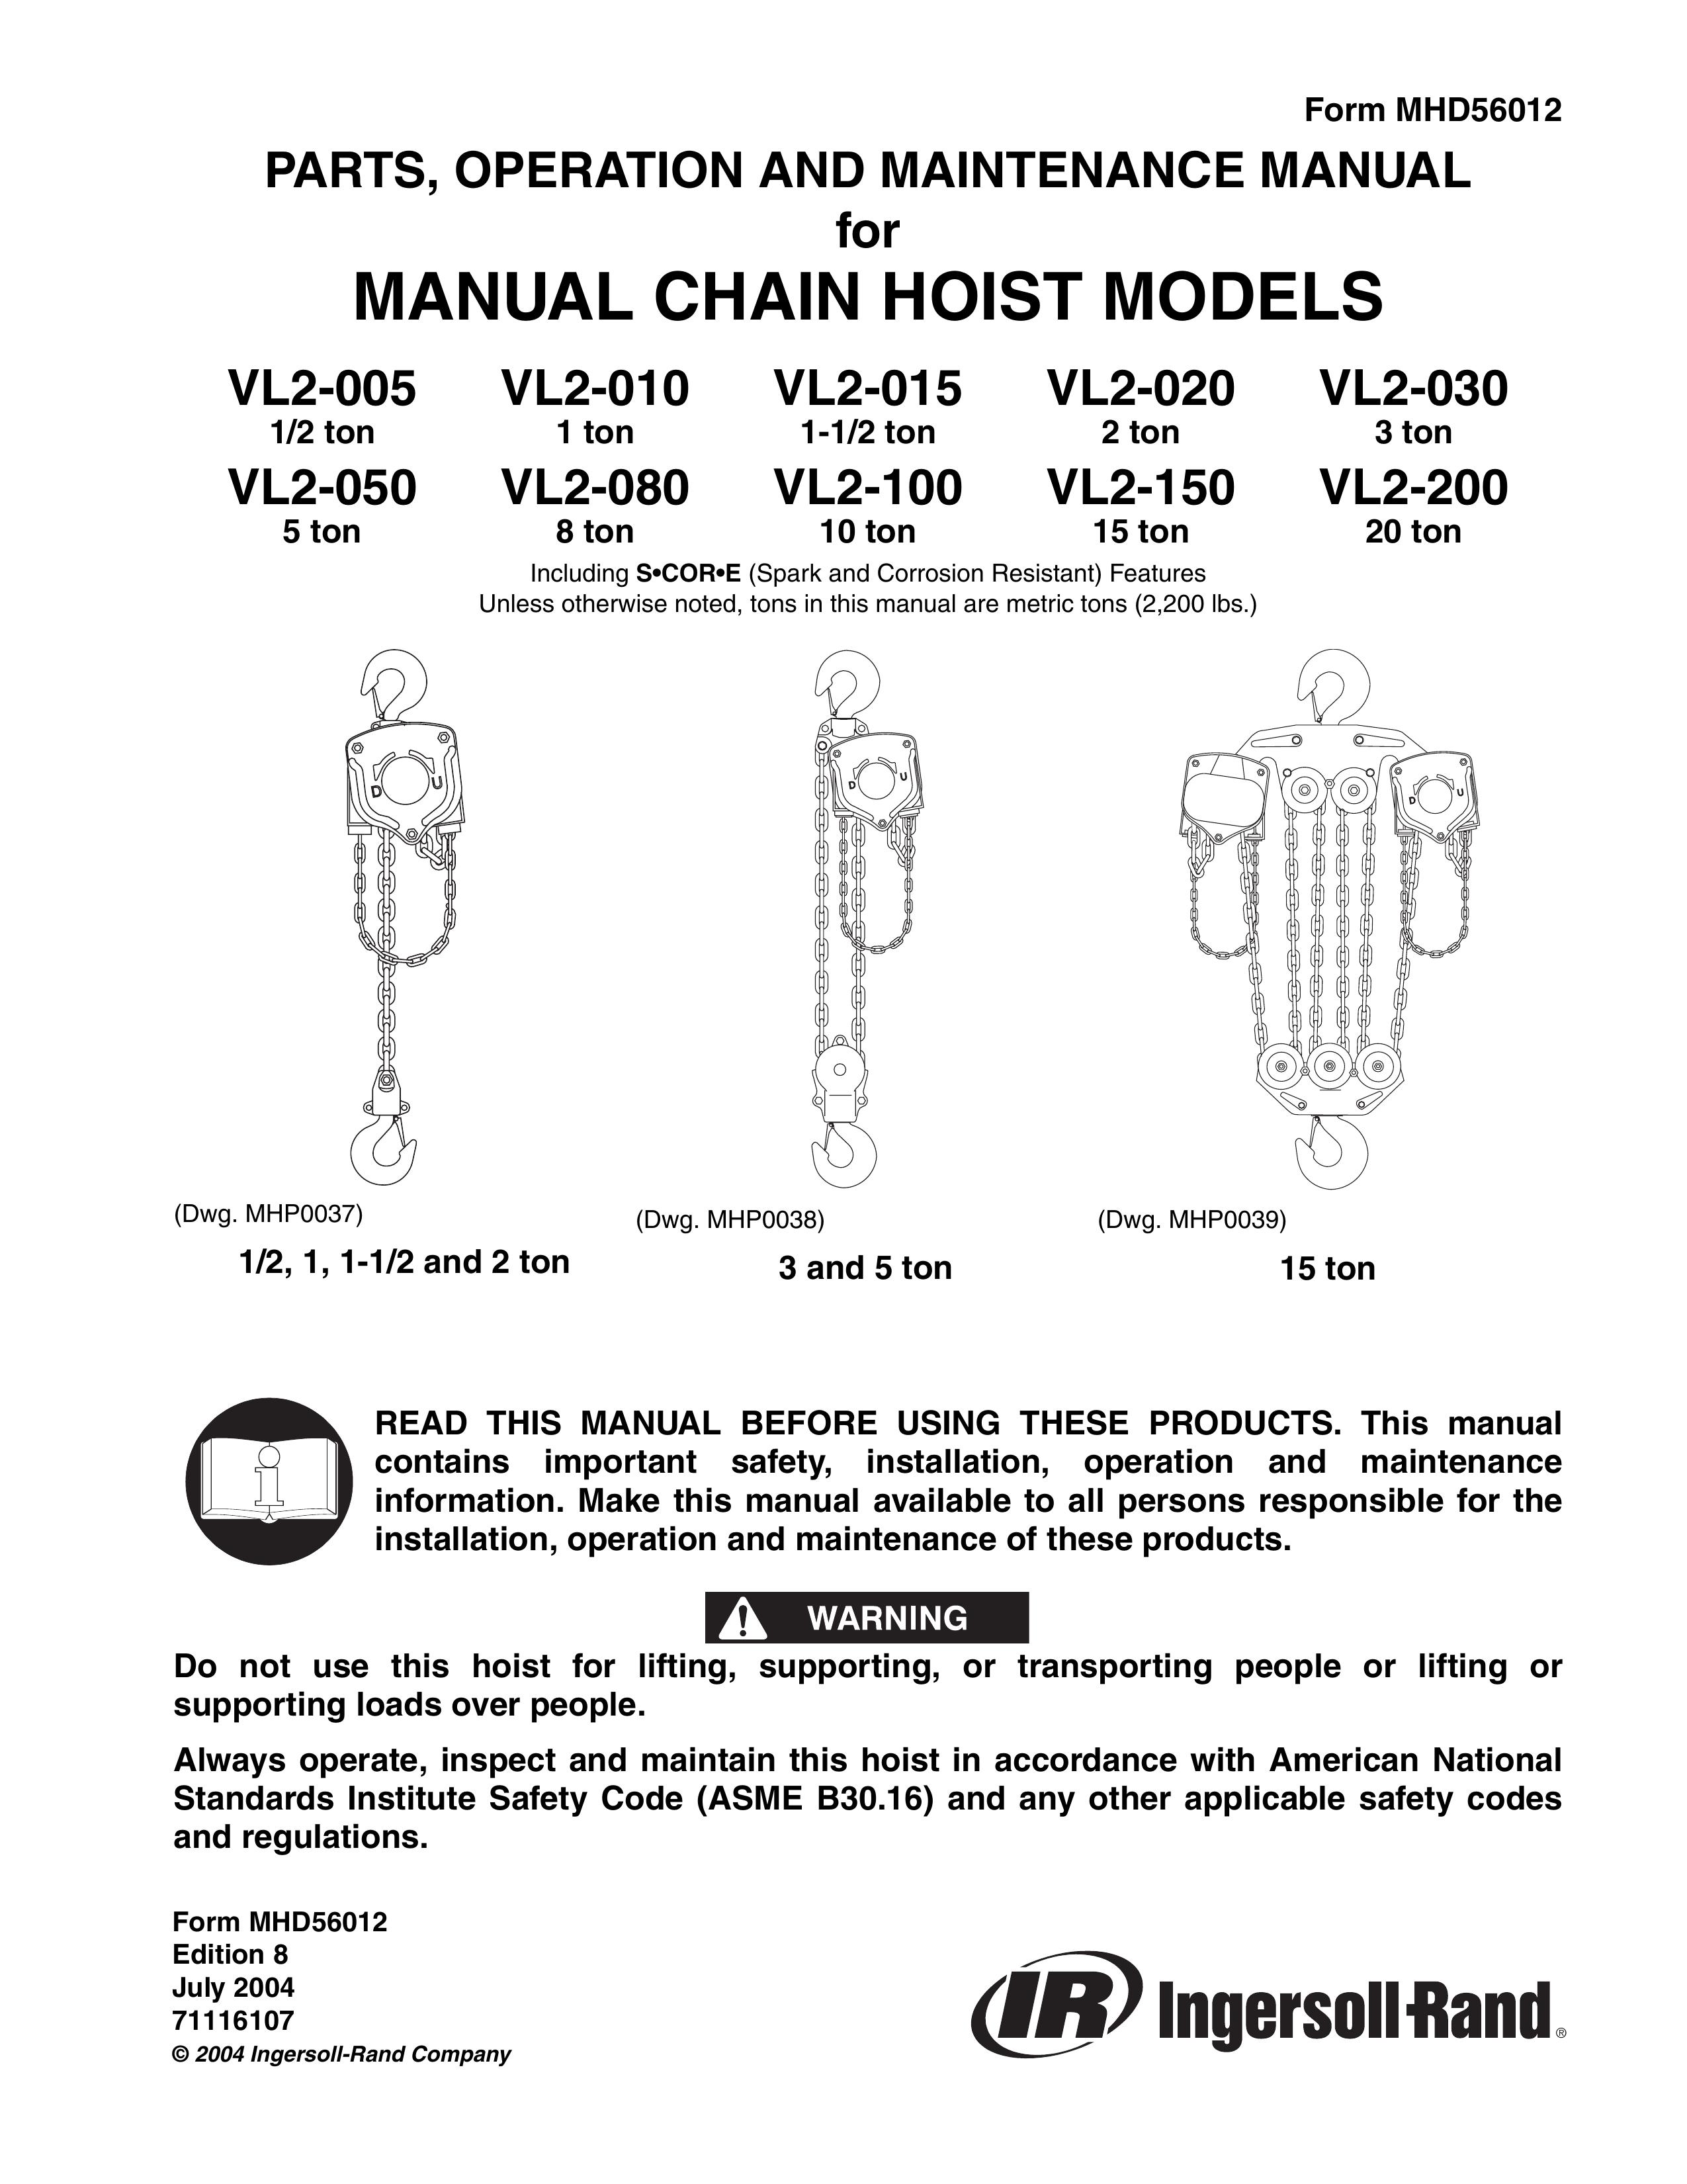 Ingersoll-Rand VL2-030 Digital Photo Keychain User Manual